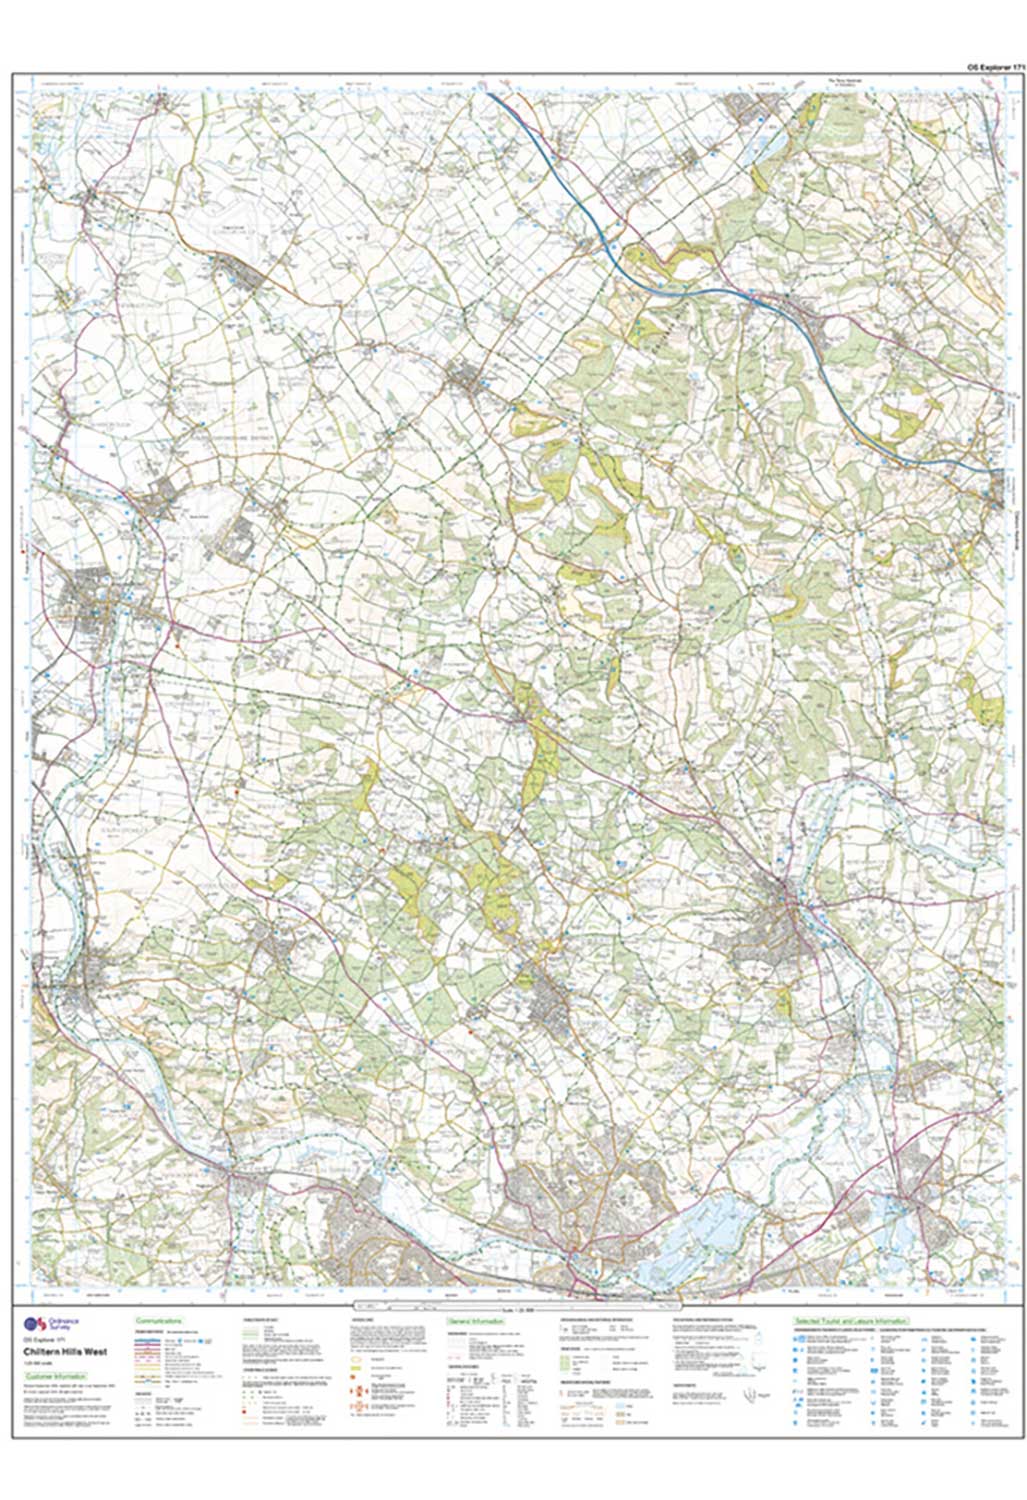 Ordnance Survey Chiltern Hills West - OS Explorer 171 Map